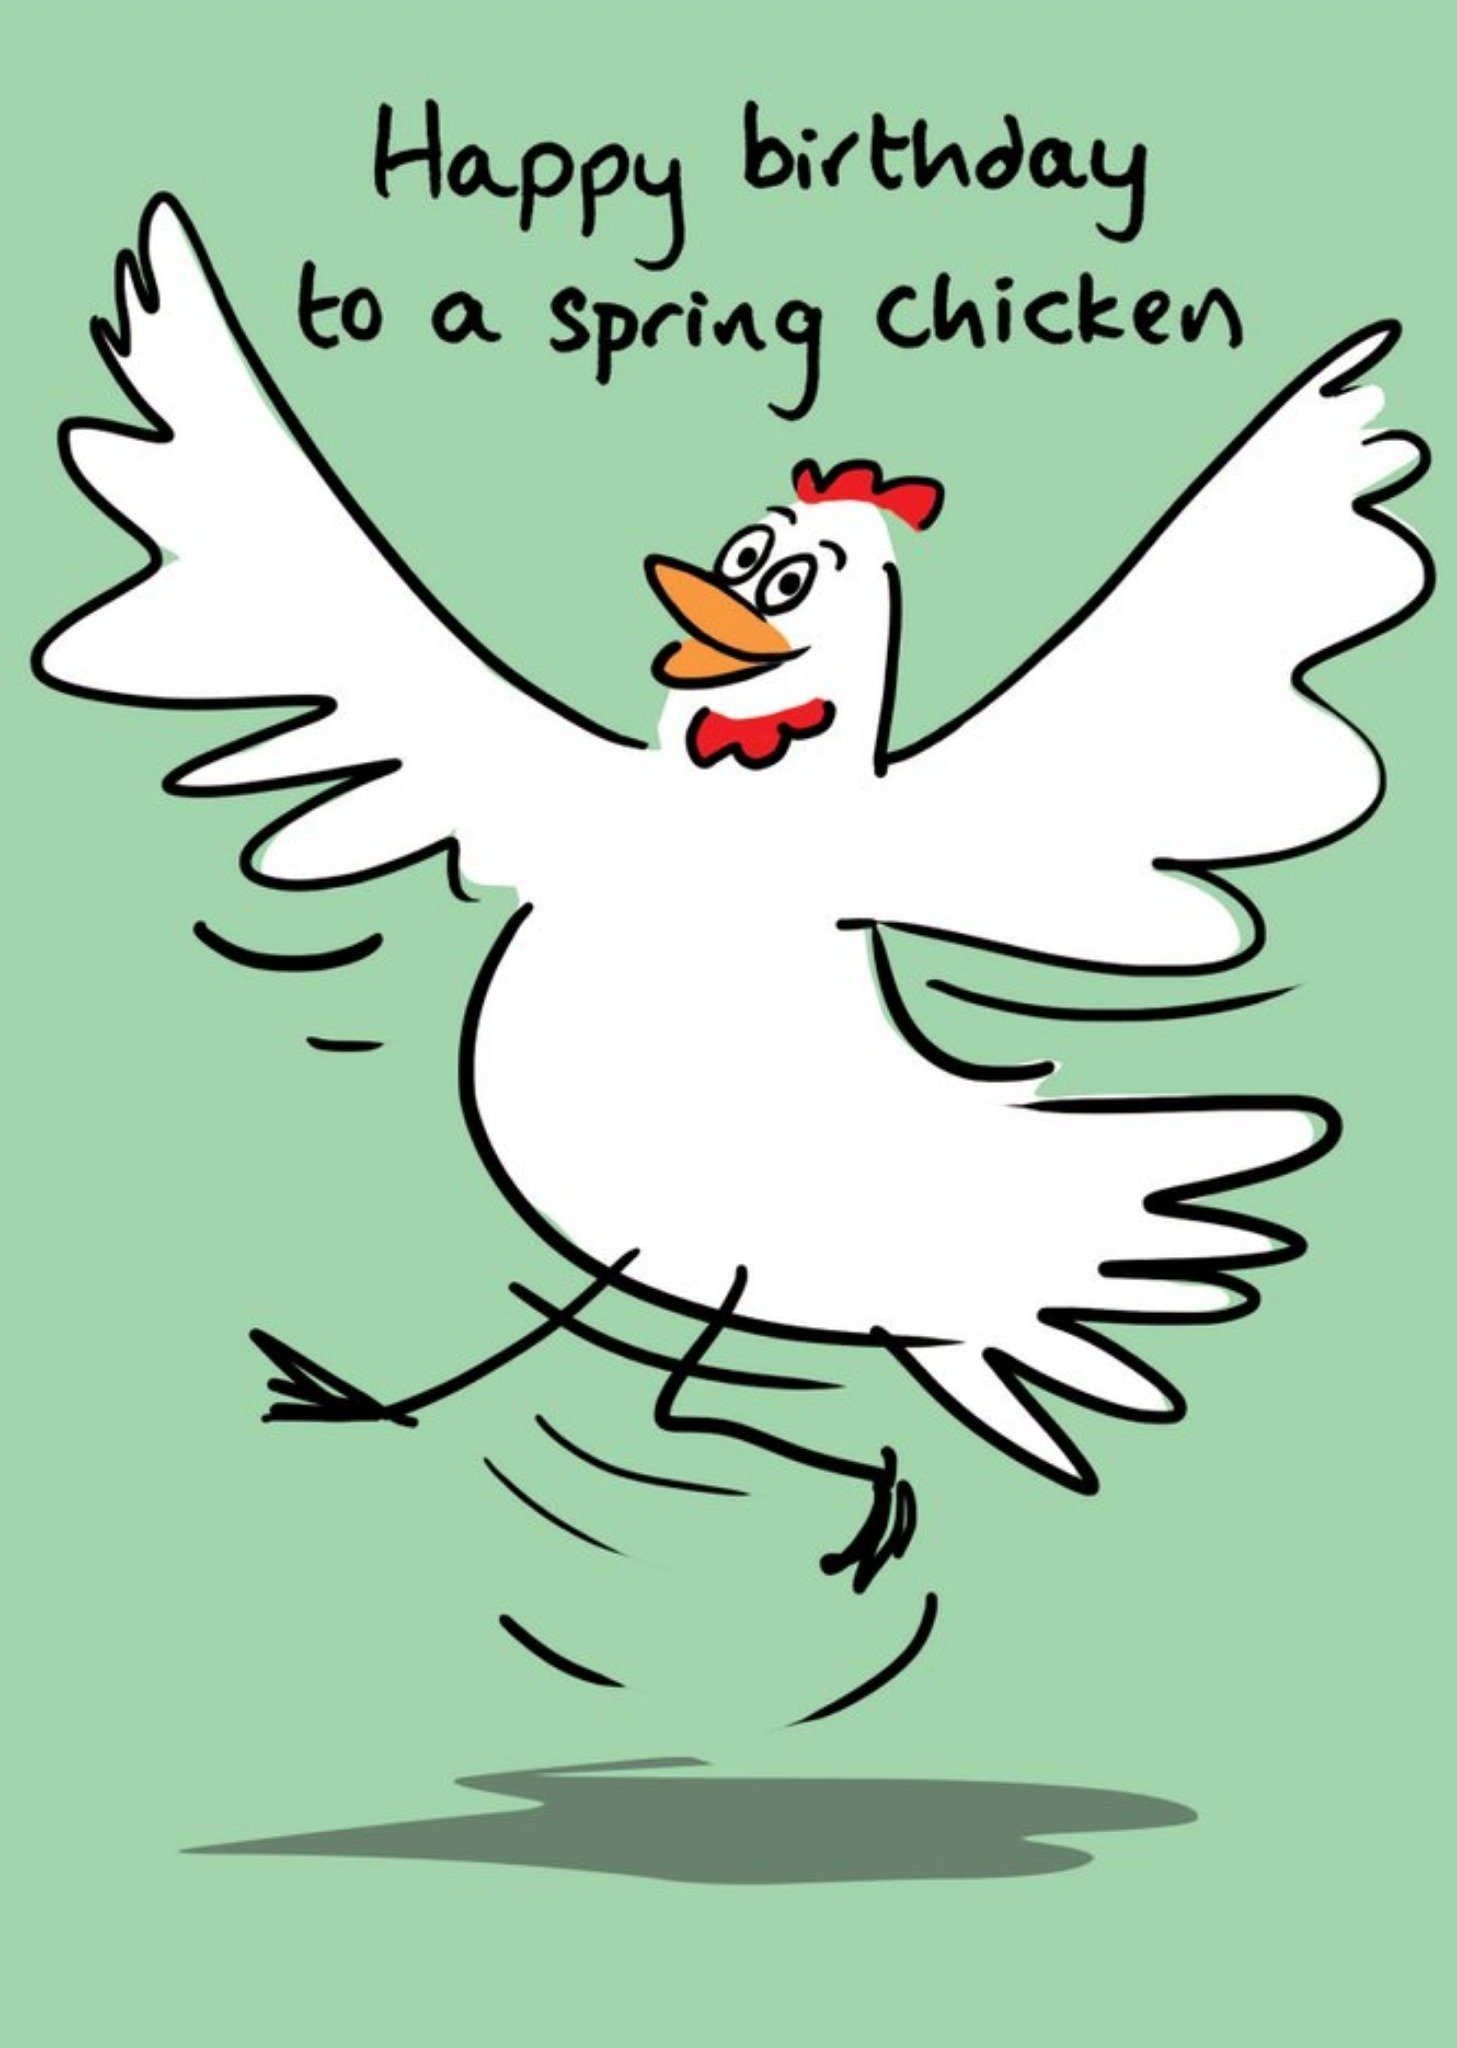 Moonpig Illustration Of A Spring Chicken Birthday Card, Large